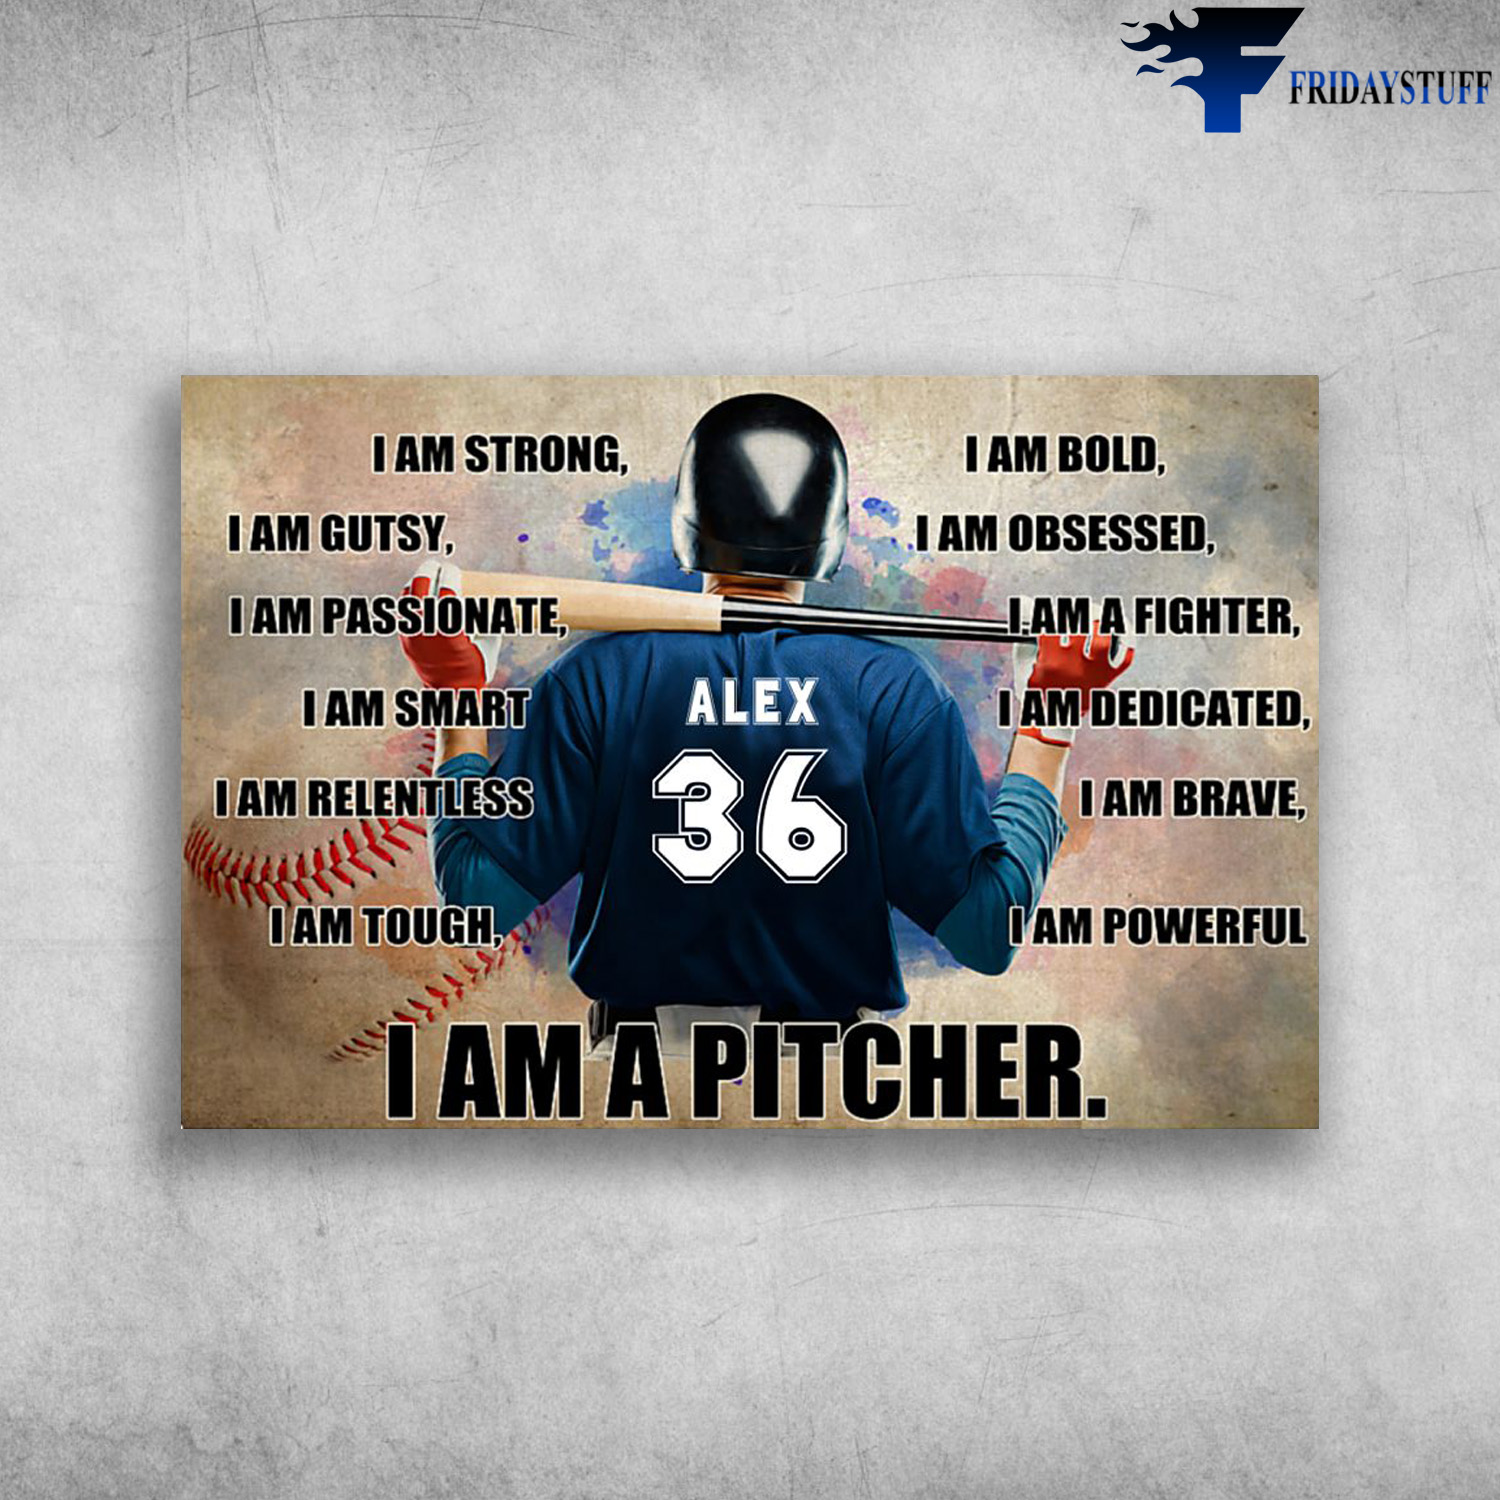 Baseball Player - I Am Strong, I Am Gutsy, I Am Passionate, I Am Smart, I Am Relentless, I Am Tough, I Am A Pitcher, I Am Blold, I Am Obsessed, I Am A Fighter, I Am Dedicater, I Am Brave, I Am Powerful